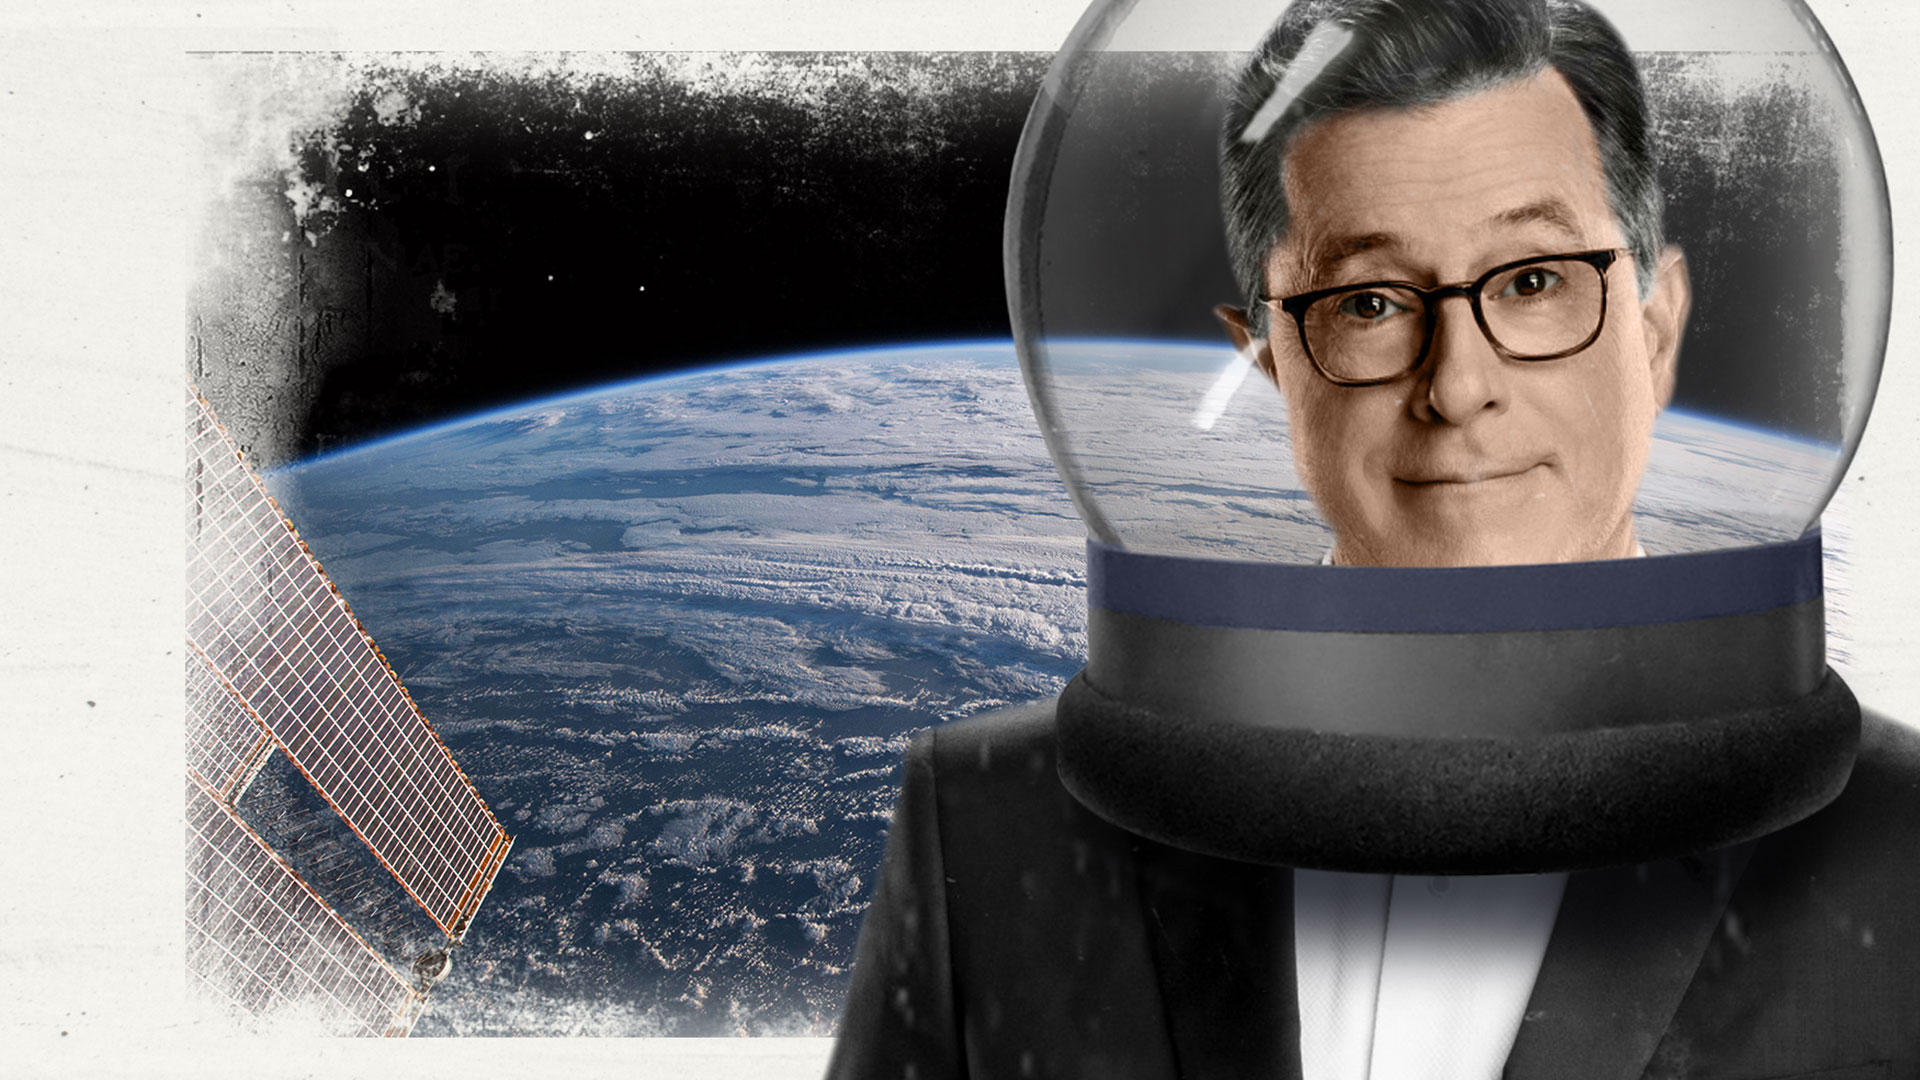 Biography: Stephen Colbert